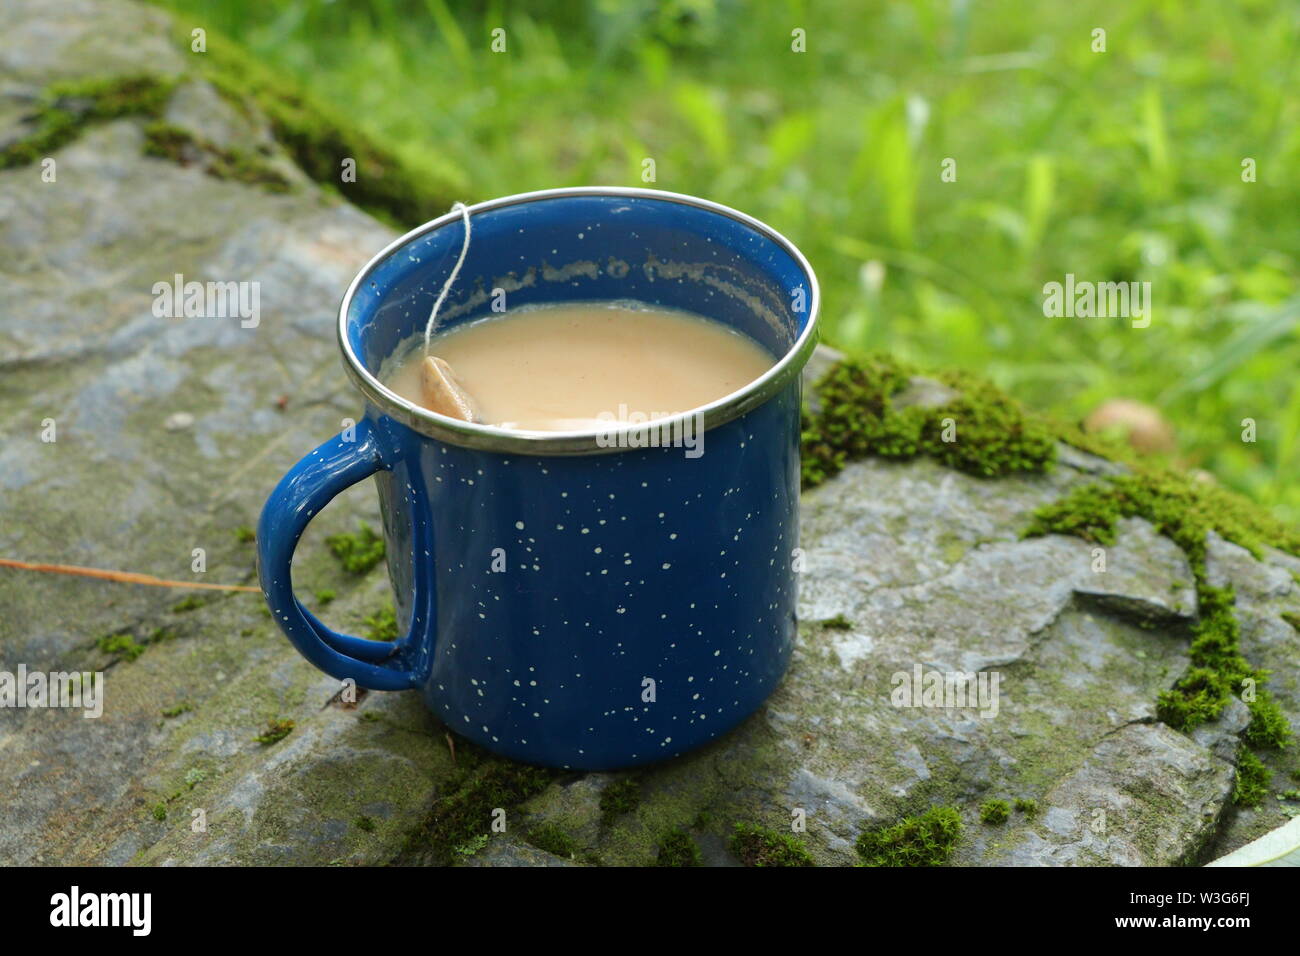 Tea Latte Chai London Fog in a blue mug on a rock, Outdoors, Camping, Picnic, enamel Stock Photo